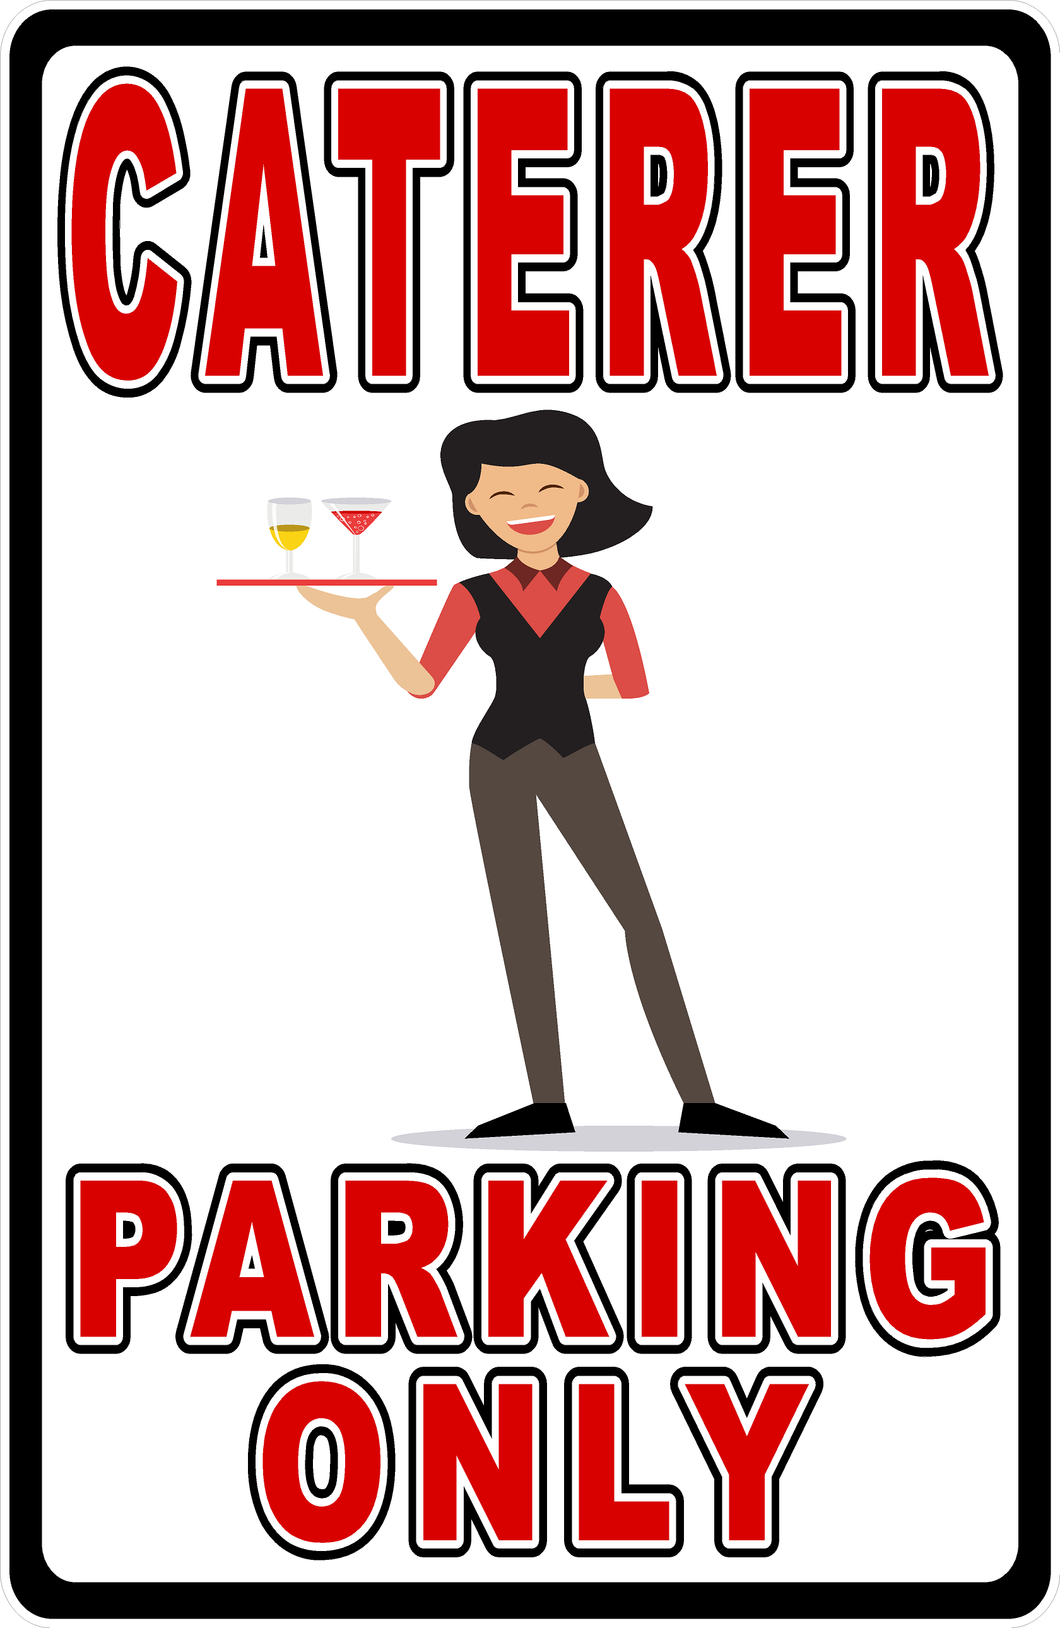 Caterer Parking Only Sign